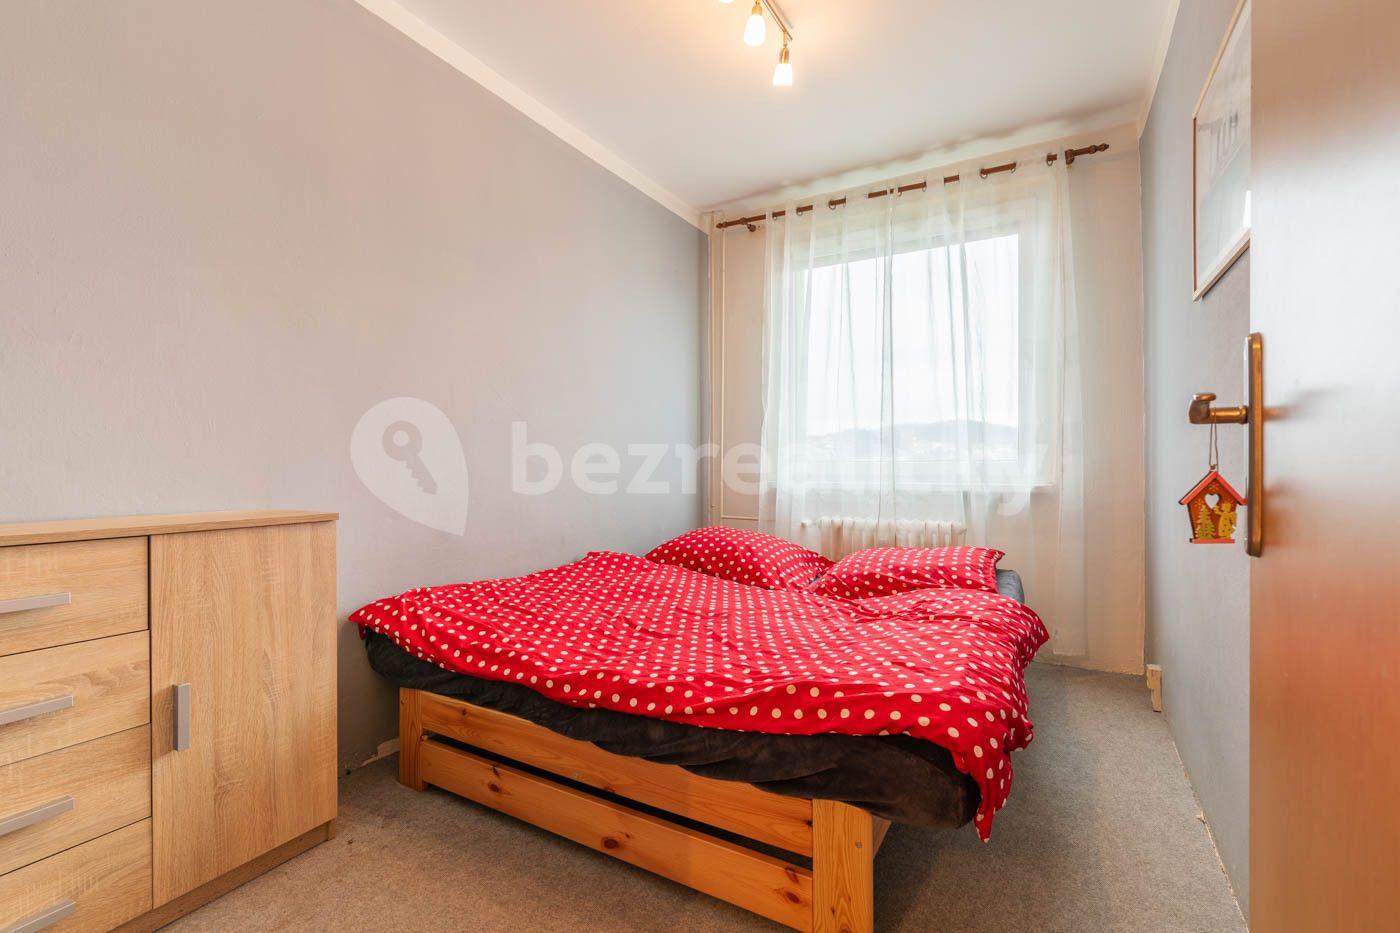 3 bedroom flat for sale, 66 m², Lužická, Jablonec nad Nisou, Liberecký Region